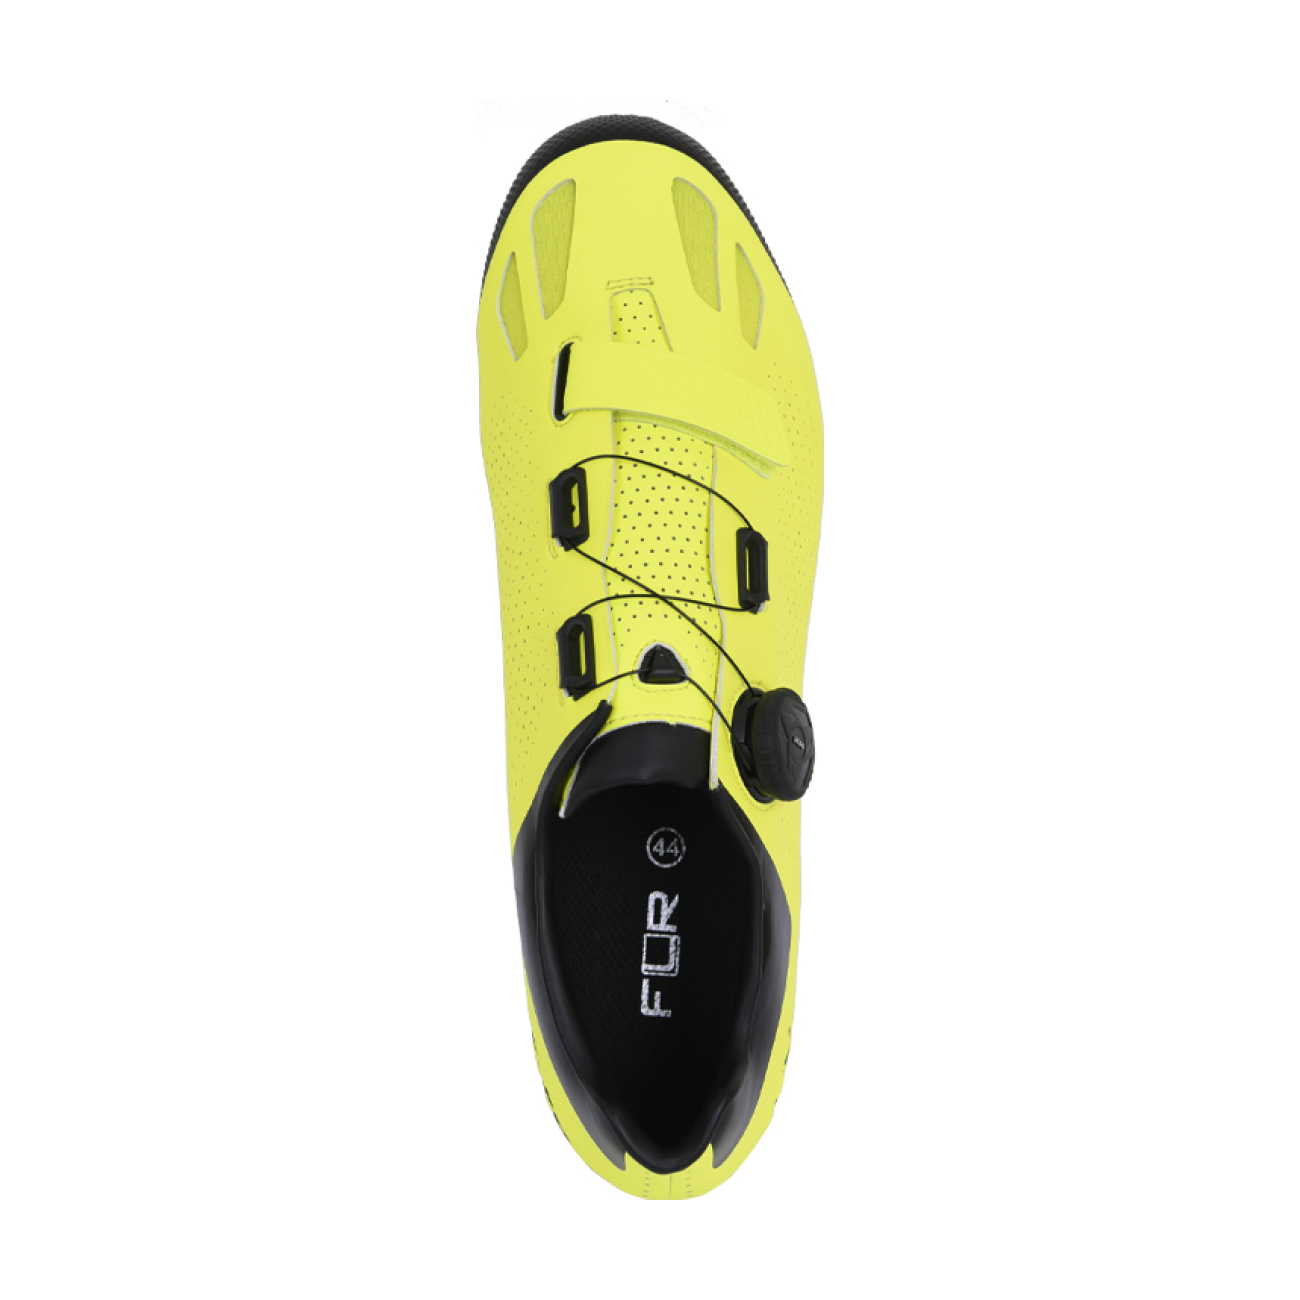 FLR Kerékpáros Cipő - F70 MTB - Sárga